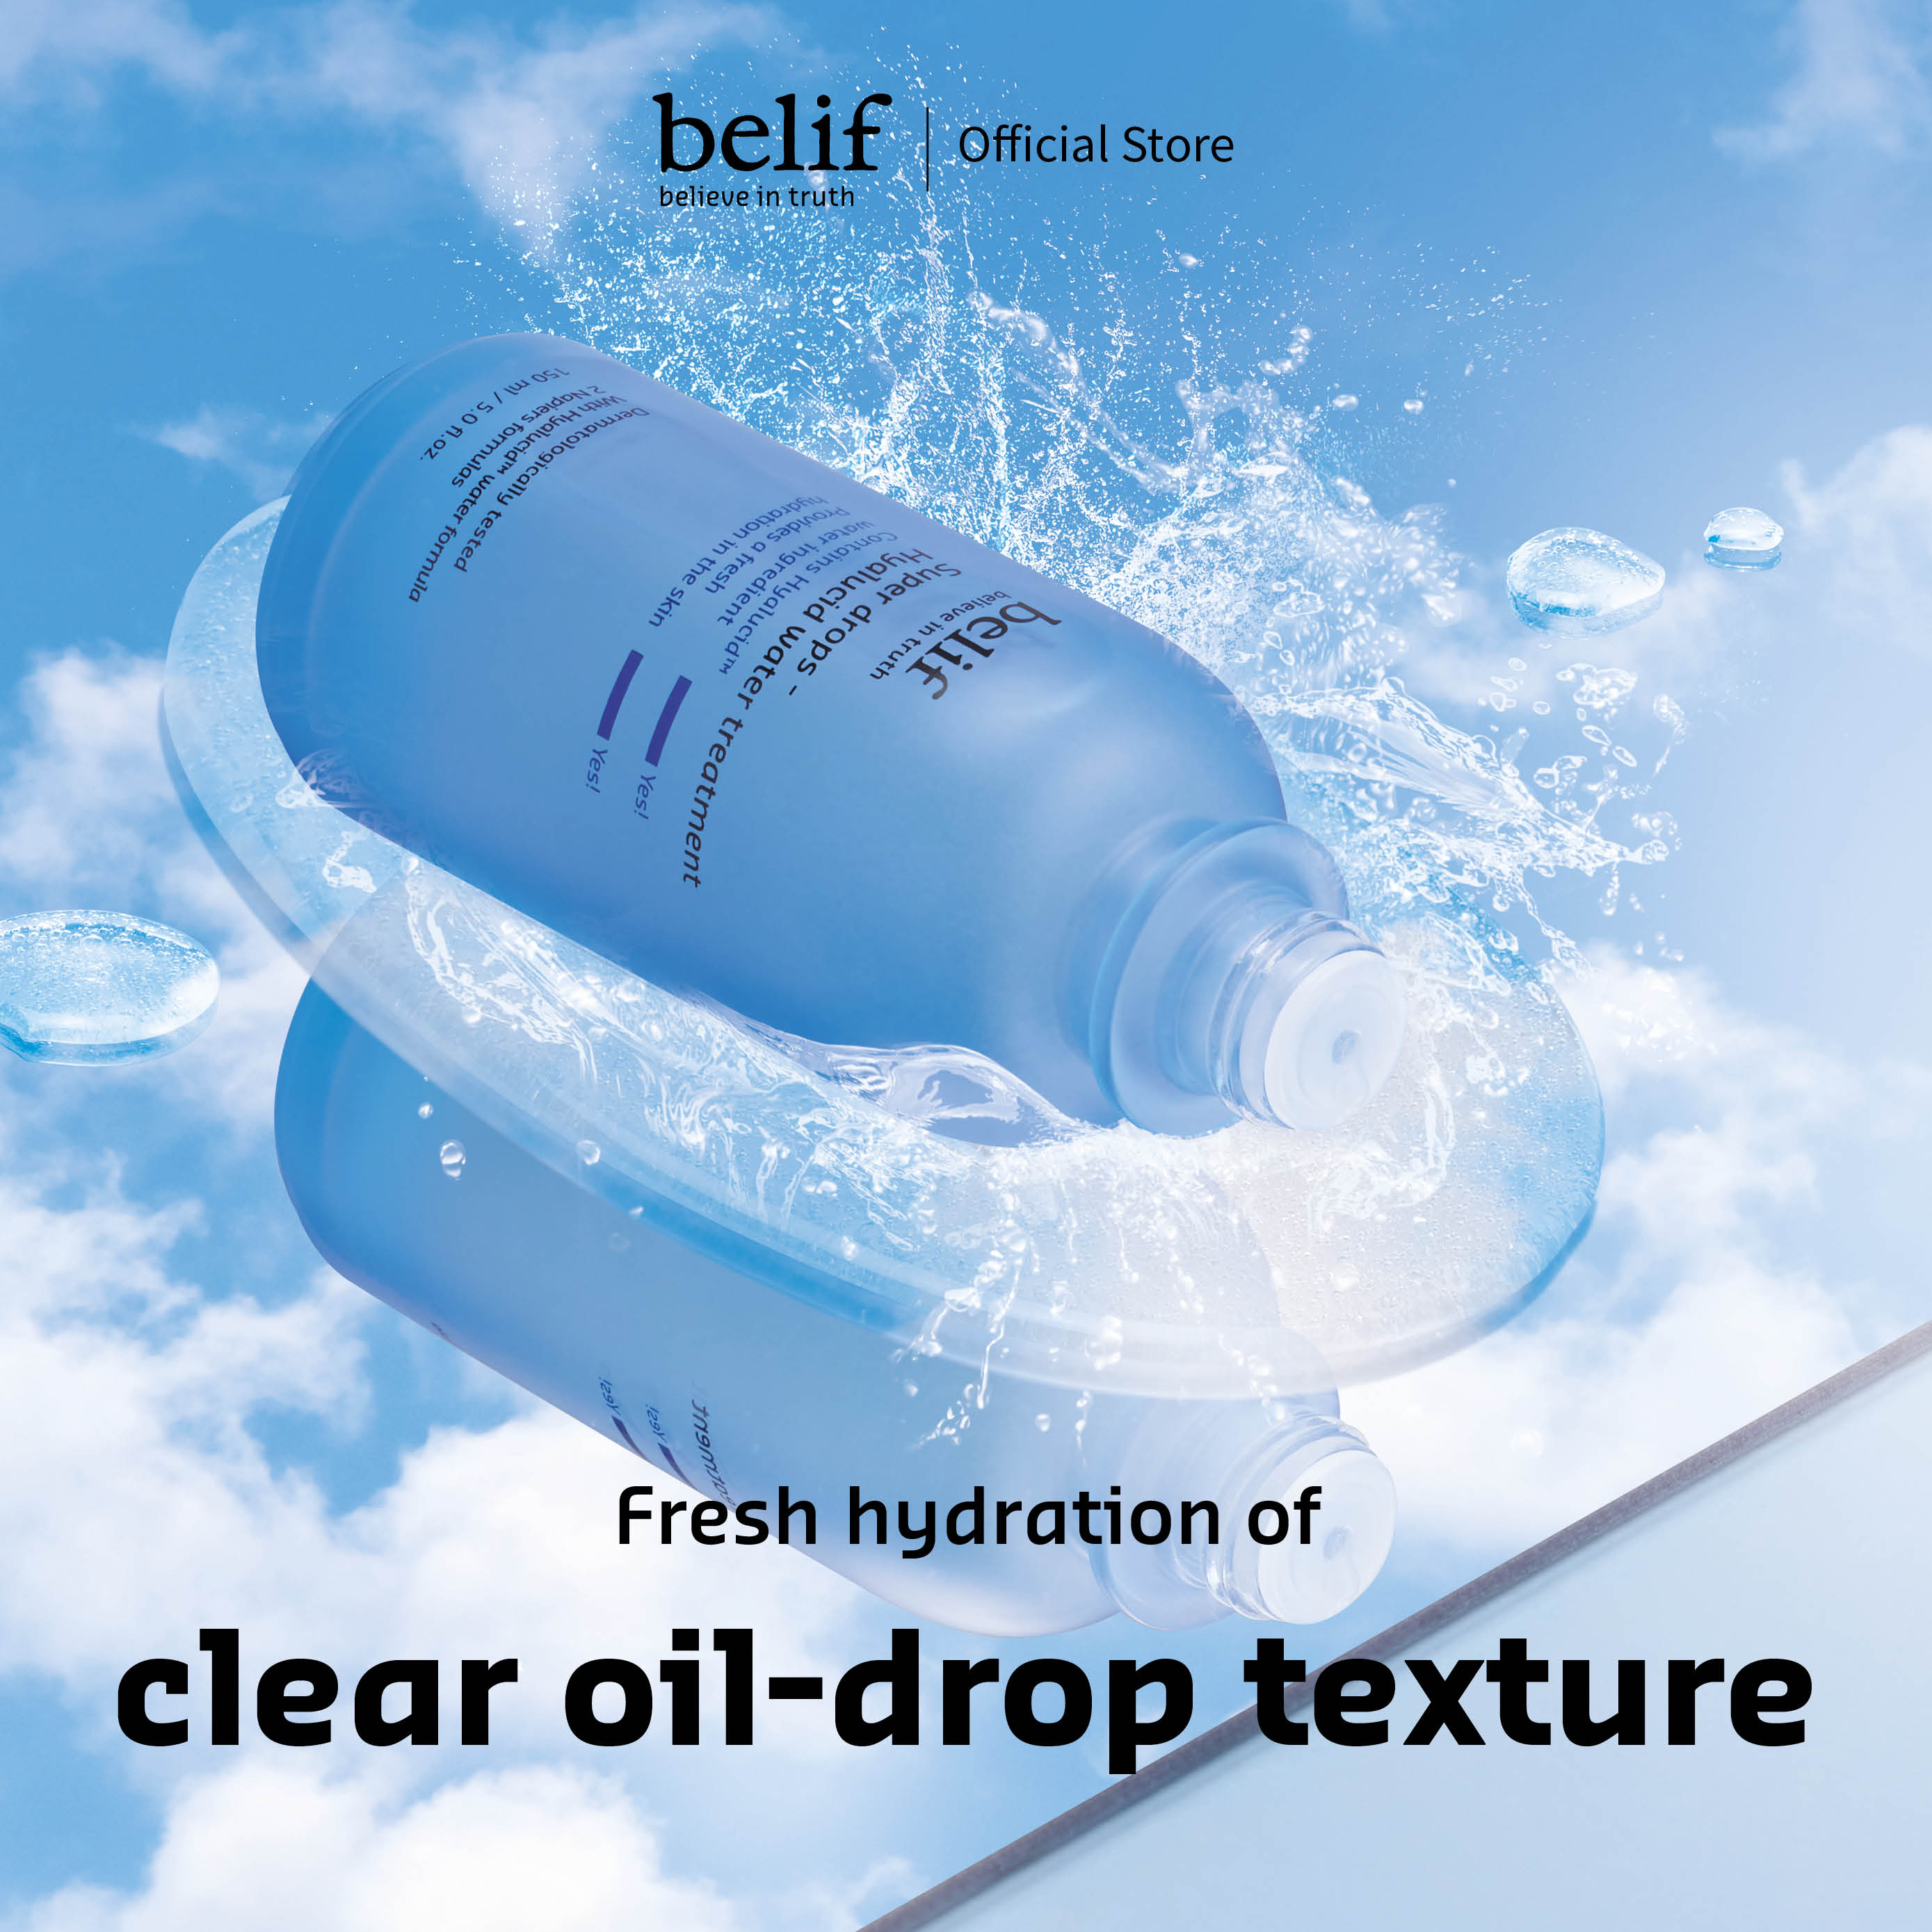 [belif] Super Drops Hyalucid Water Treatment 150ml